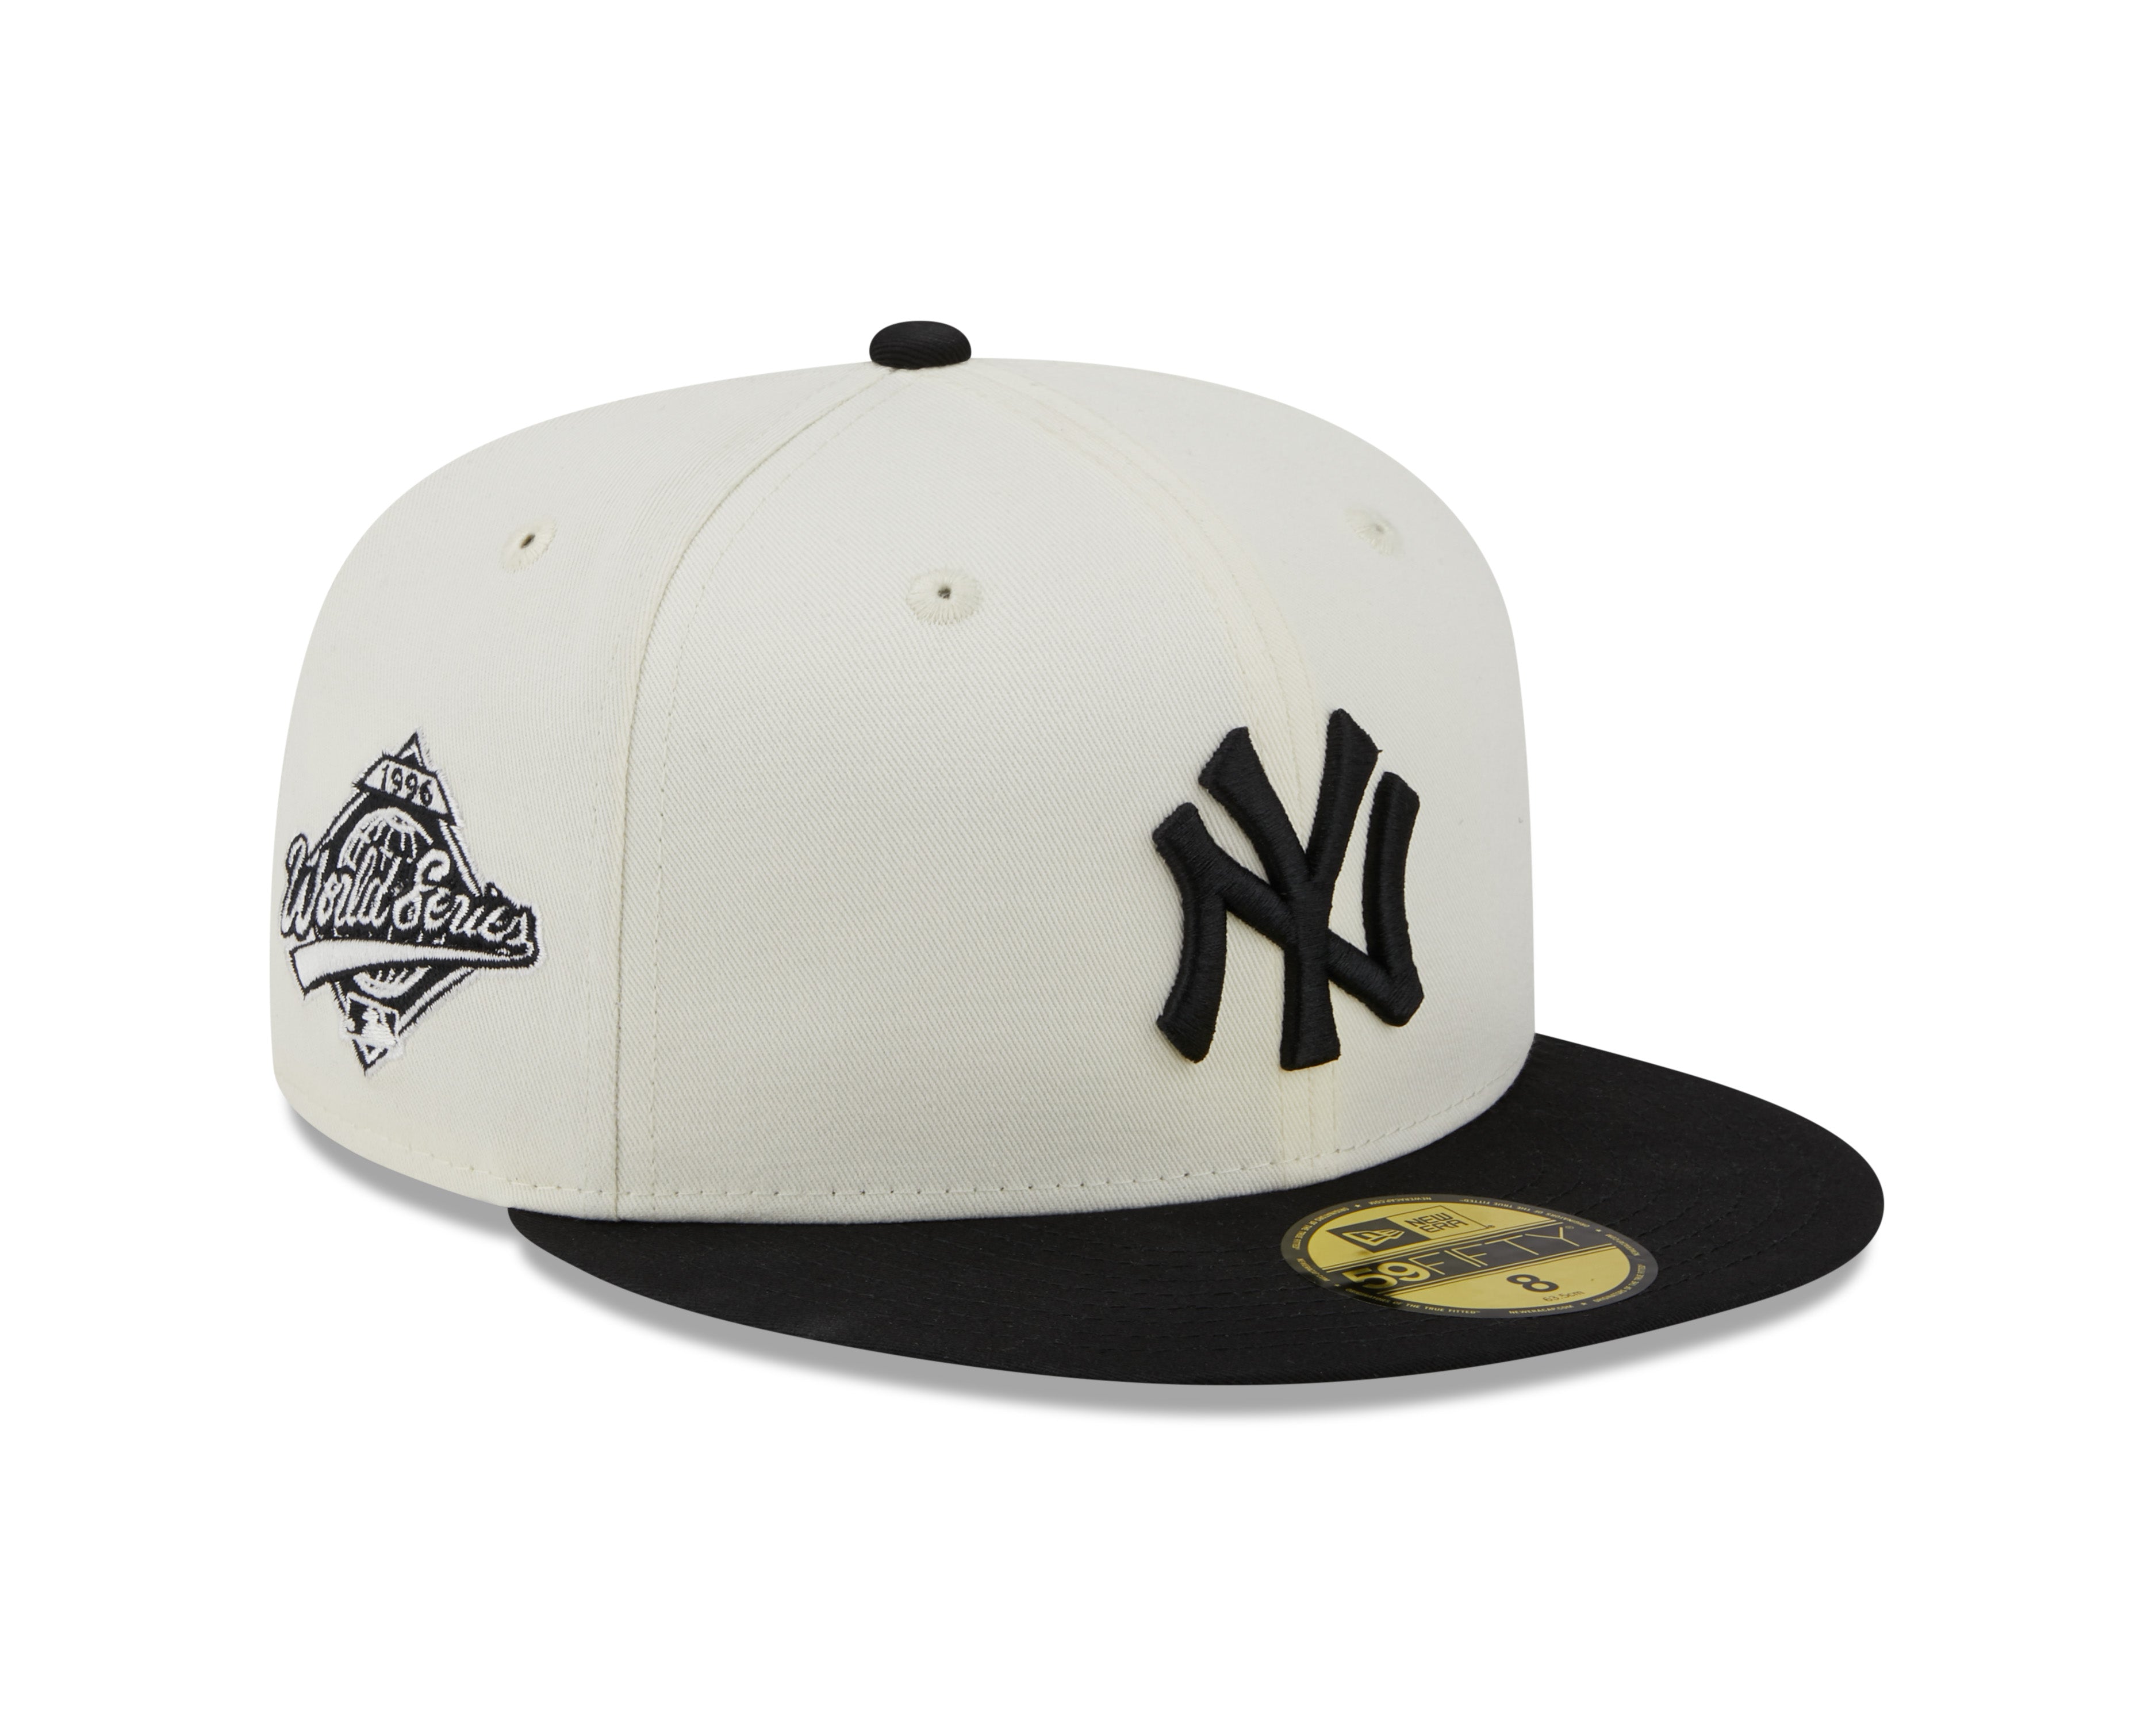 New Era 59Fifty Fitted Cap CHAMPIONSHIPS New York Yankees - White/Black - Headz Up 